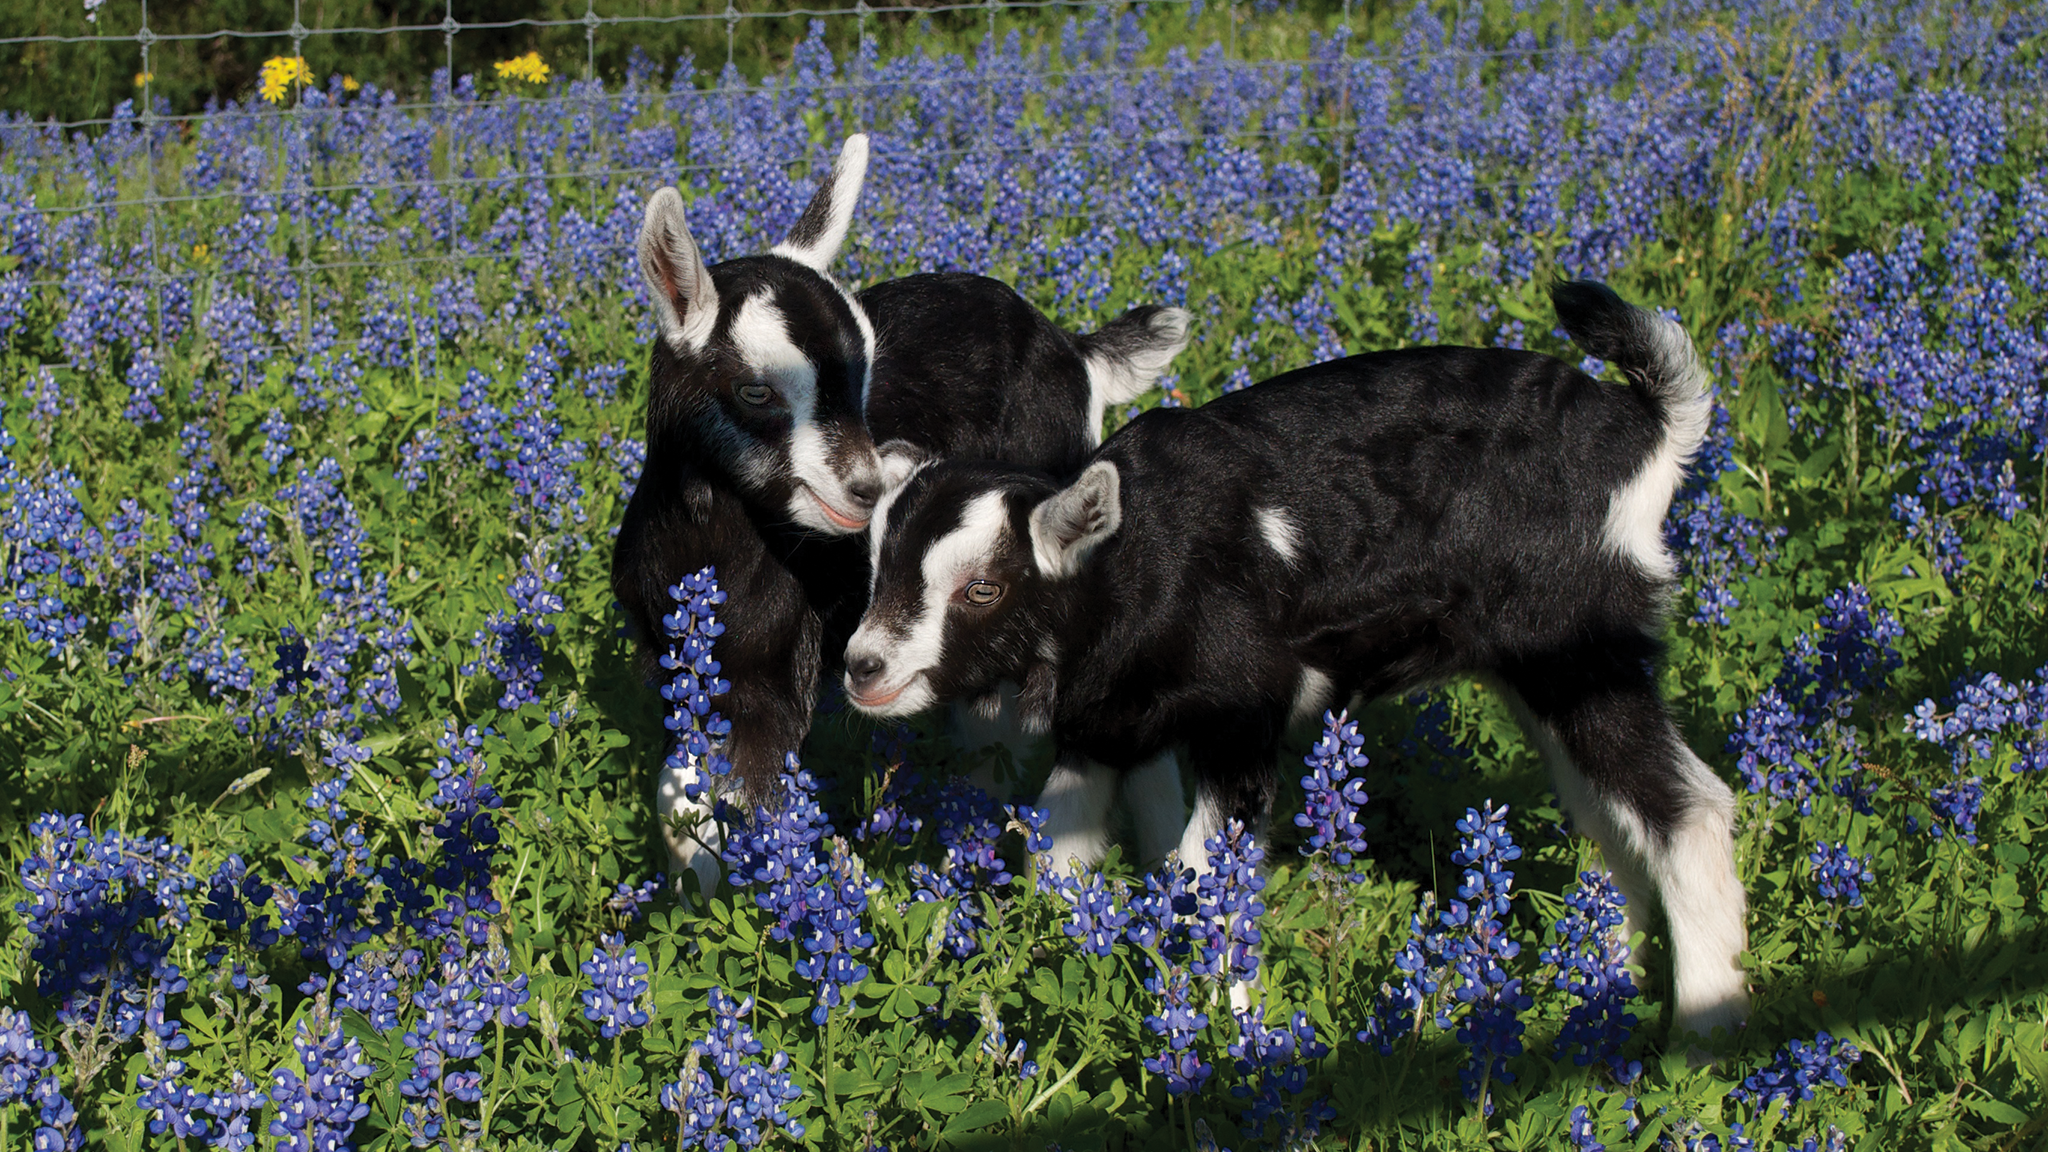 two baby goats in a field of bluebonnets